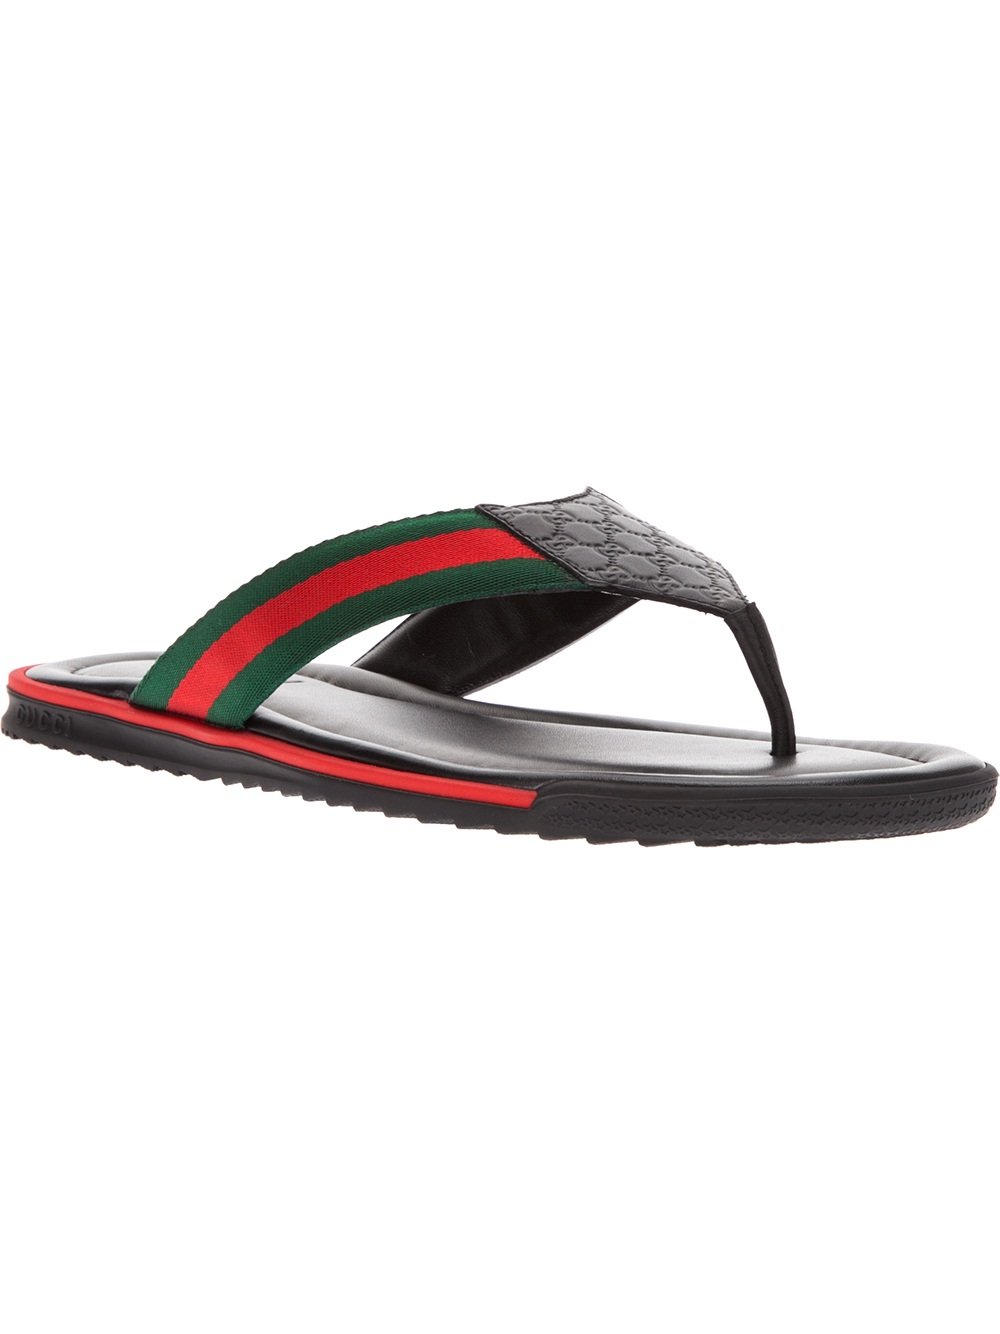 gucci men's flip flops on sale